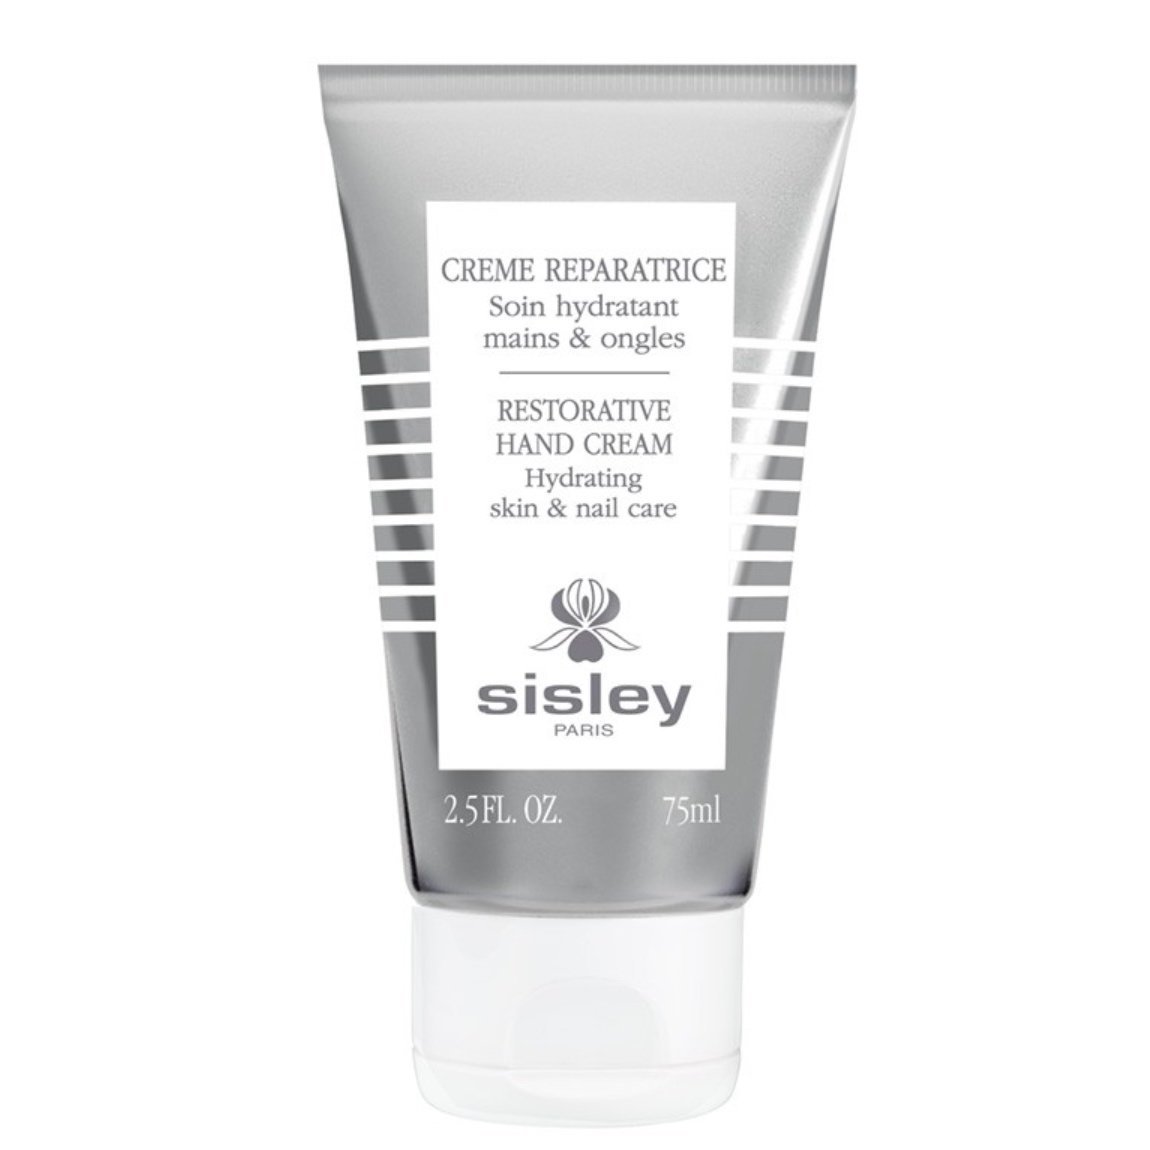 Sisley-Paris Restorative Hand Cream alternative view 1 - product swatch.